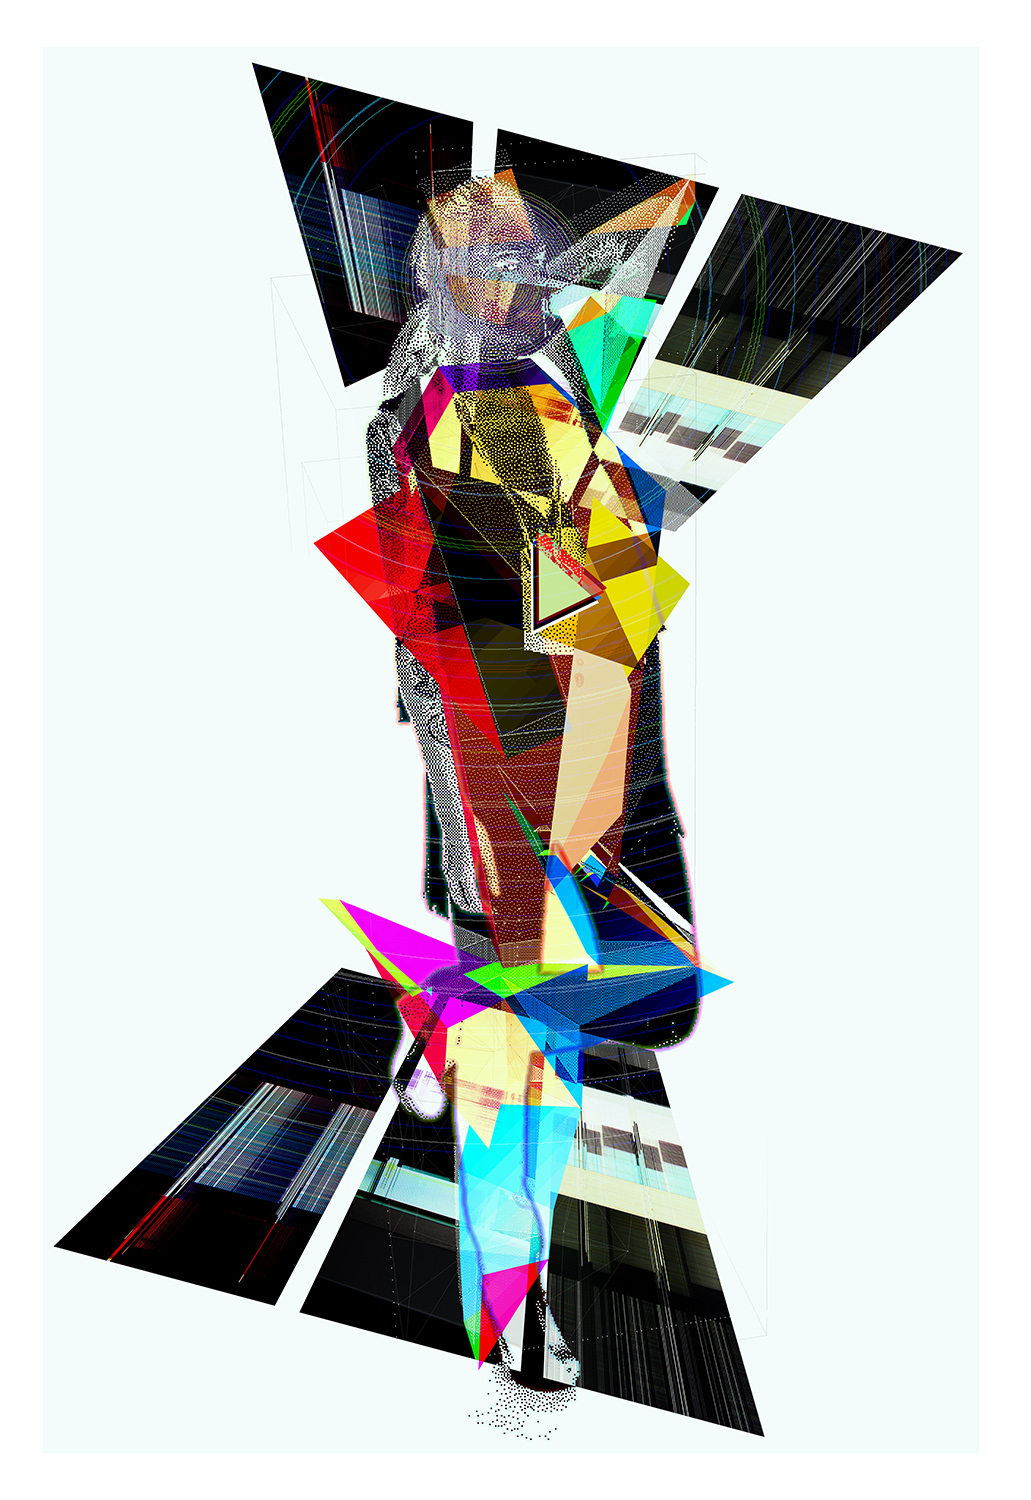   Singularity   Archival Pigment Print, edition of 3   44" x 64"    2012  